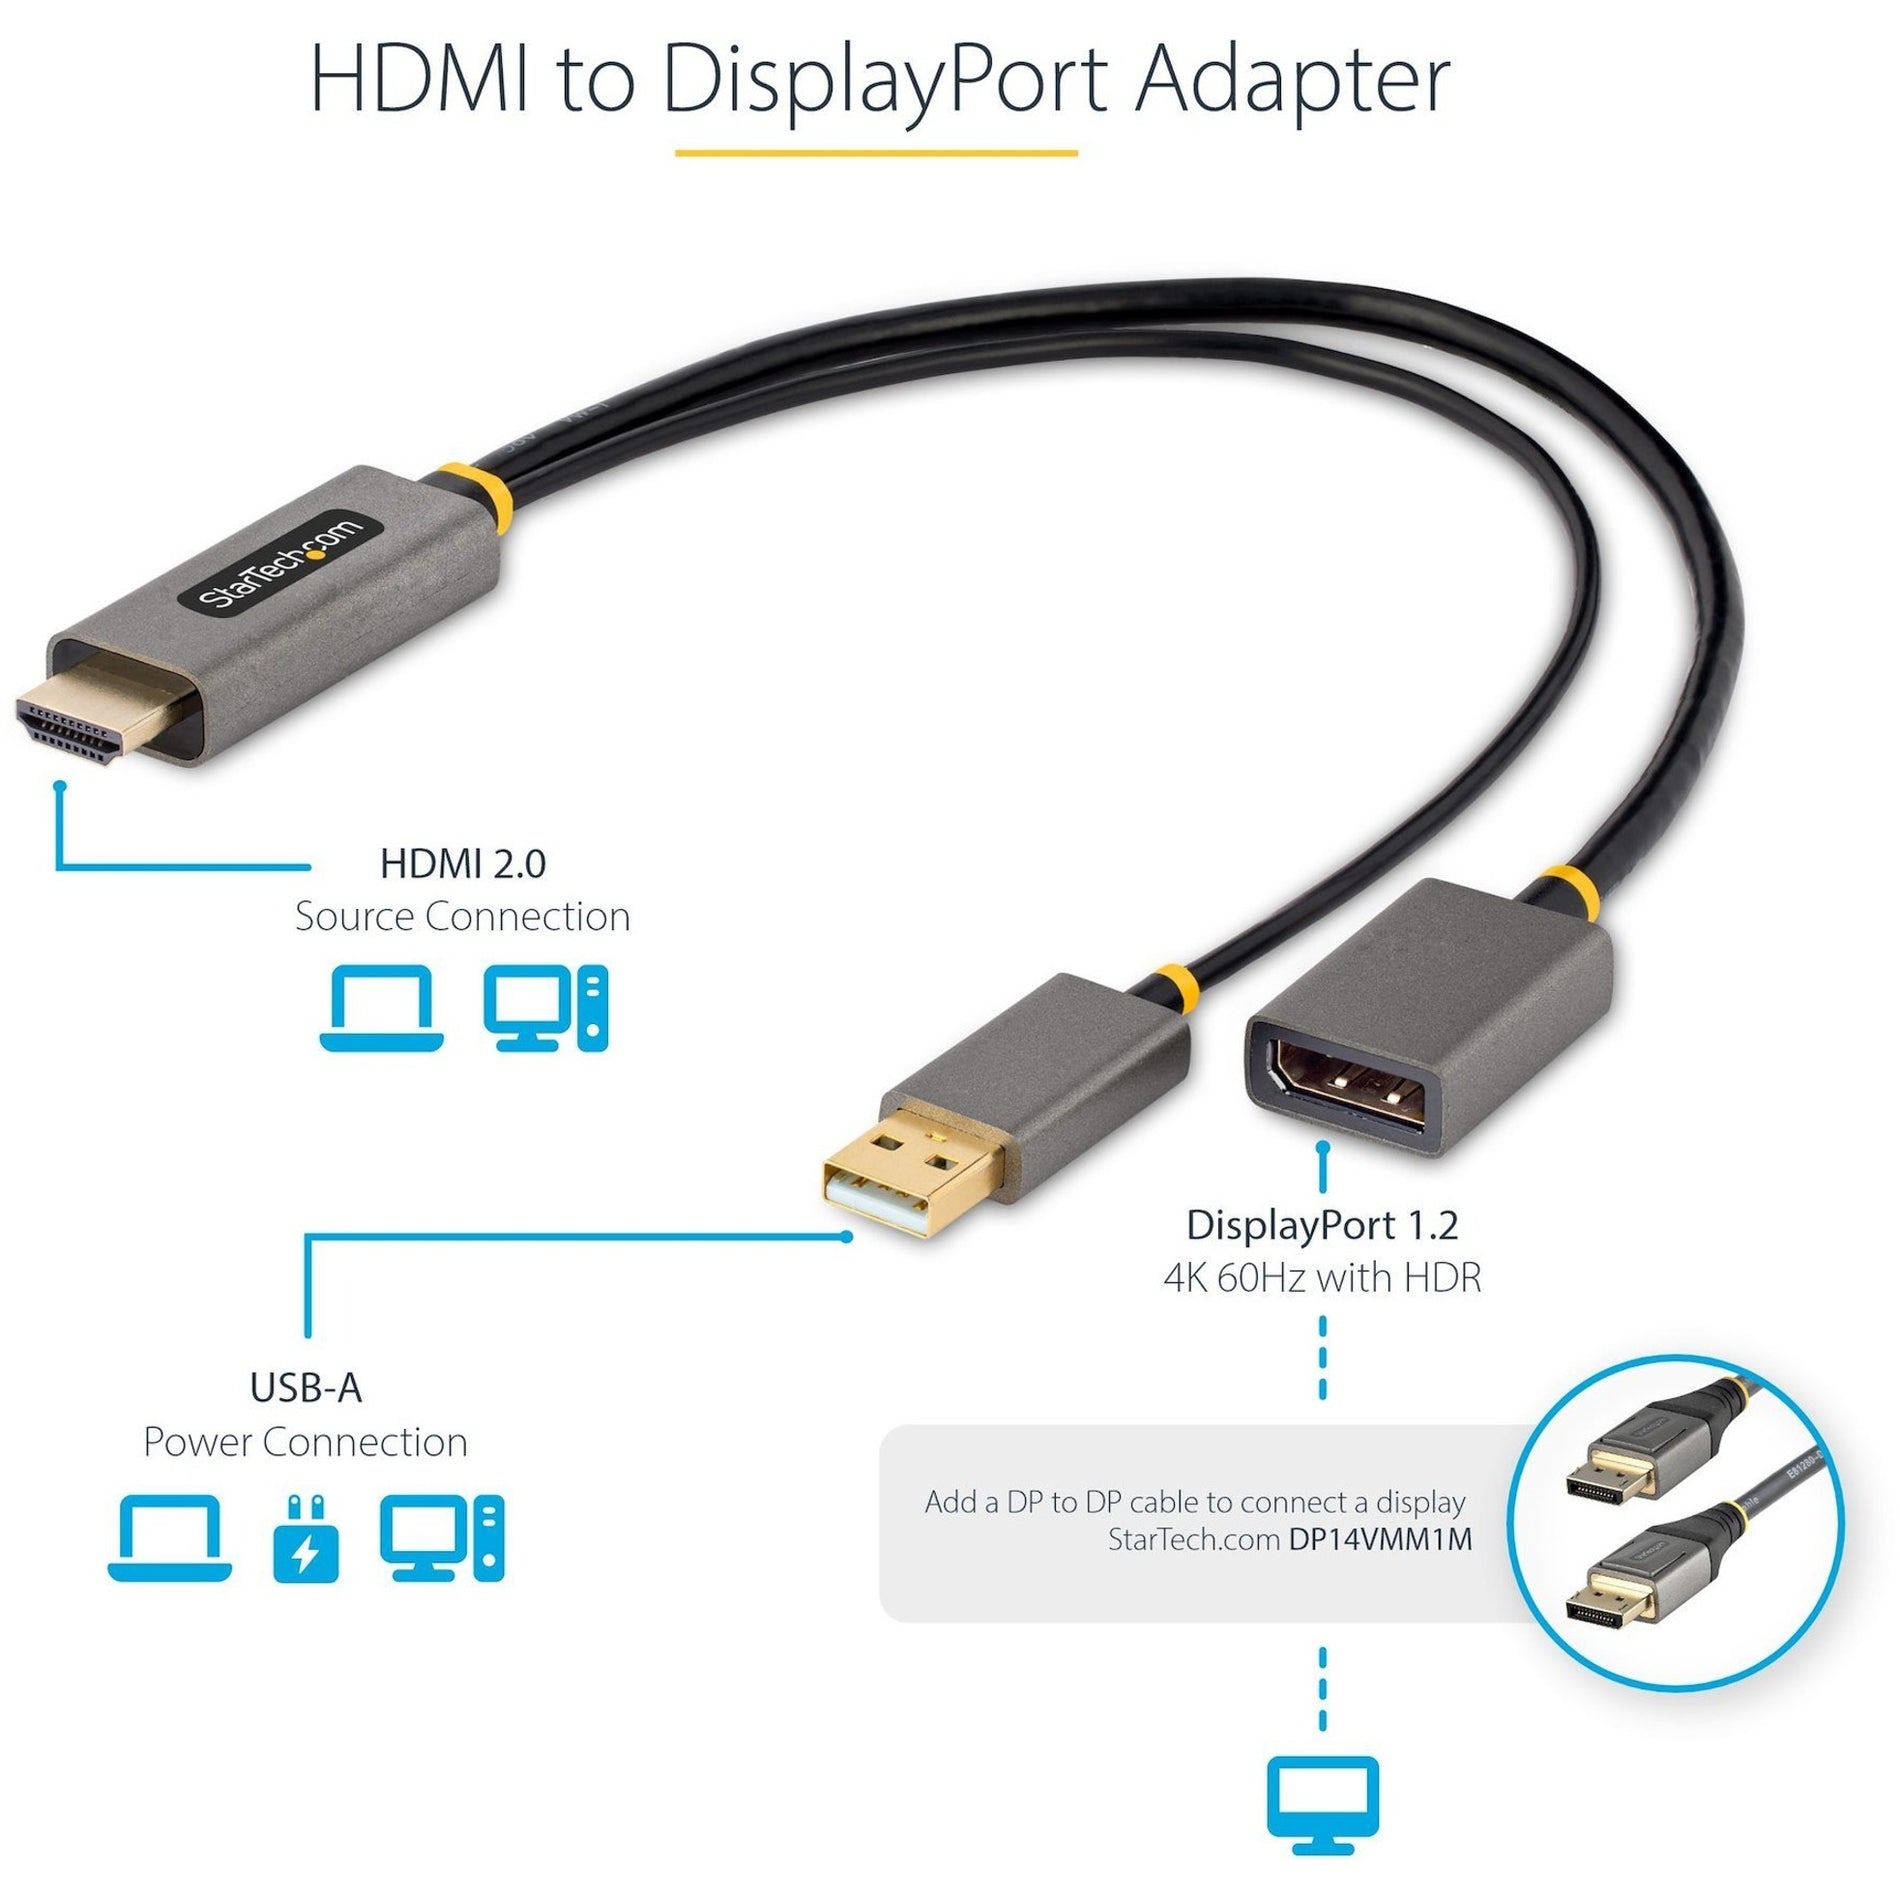 StarTech.com 128-HDMI-DISPLAYPORT HDMI to DisplayPort Adapter, 4K 60Hz HDR USB Powered